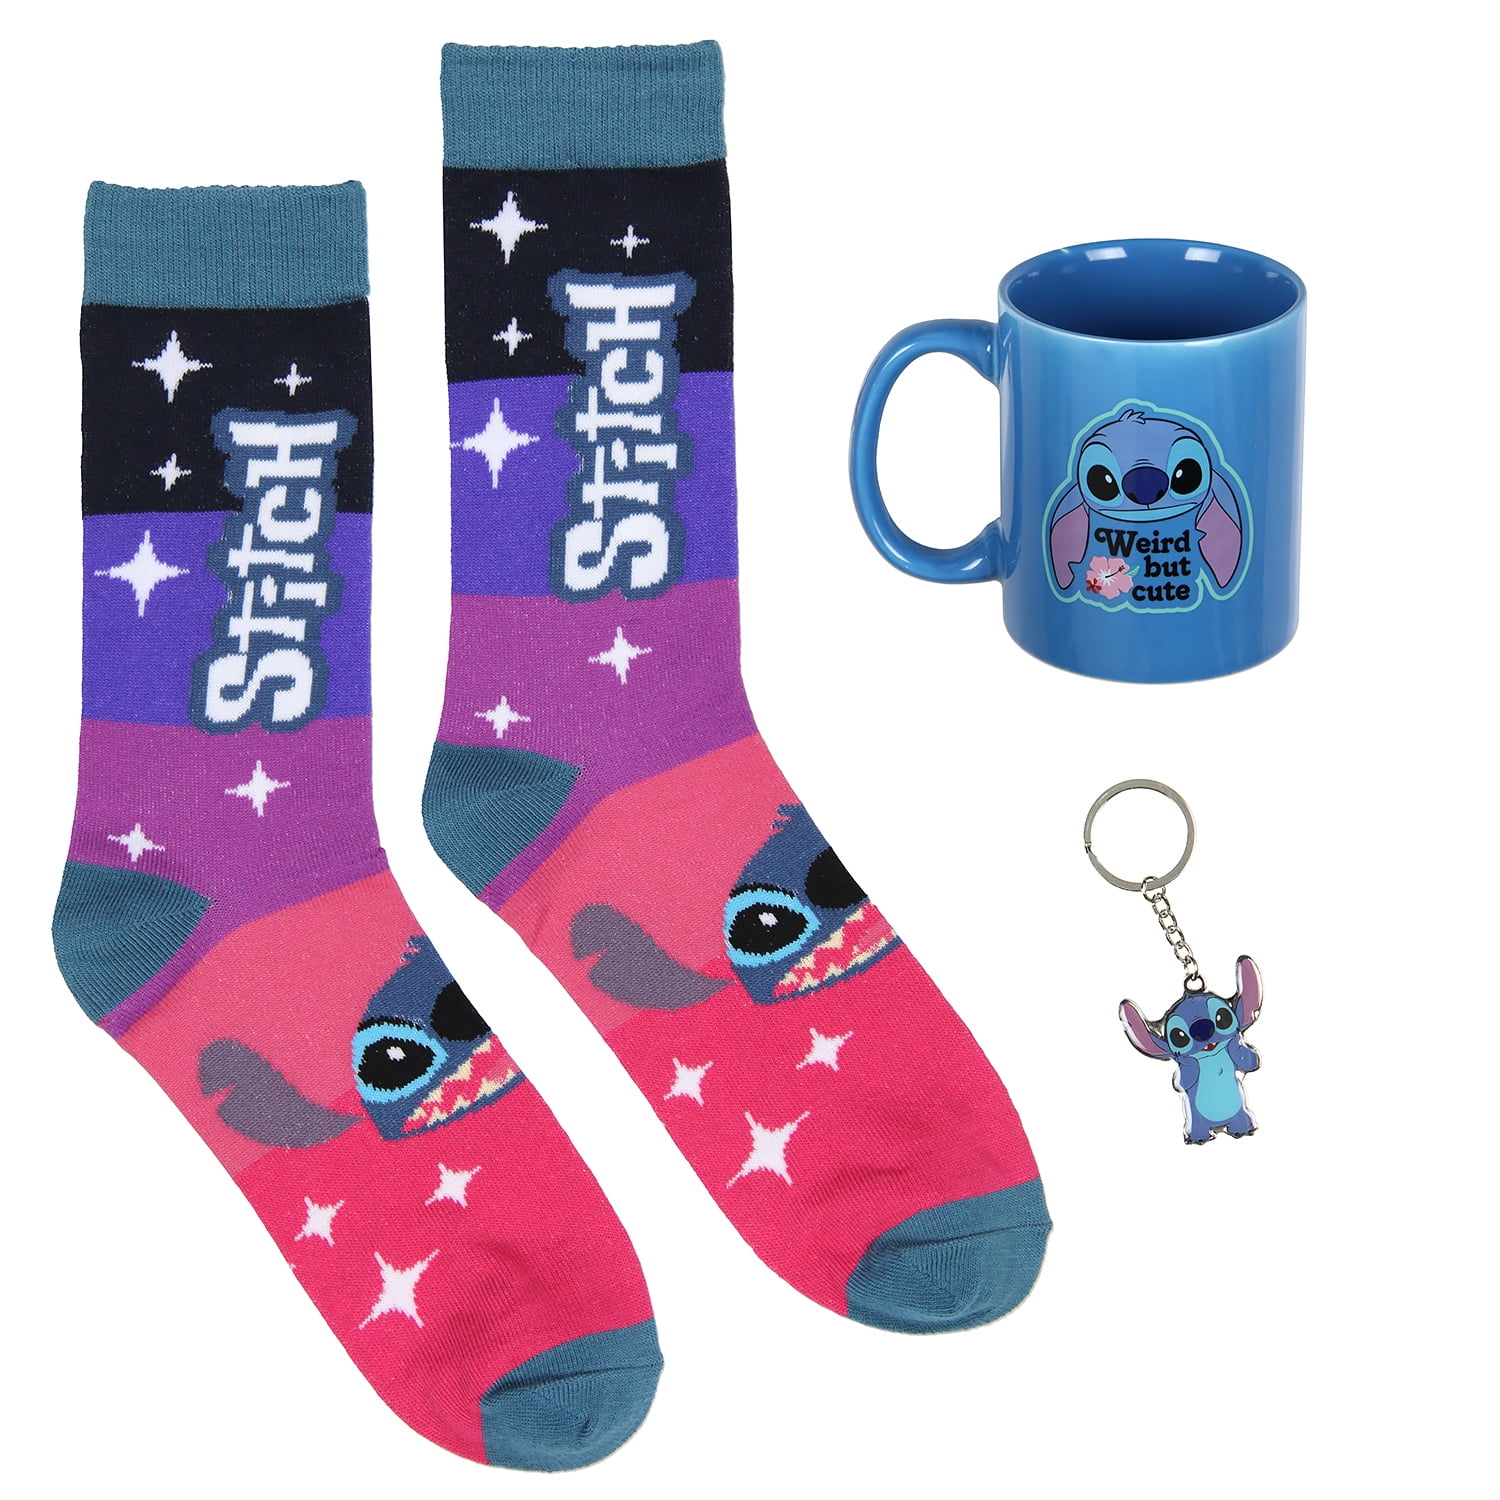 Disney Stitch Mug and Socks Gift Set for Women Teenagers Size 4-9 Womens Socks and Mug for Kids and Adults Stitch Gifts (Dark Blue Stitch)